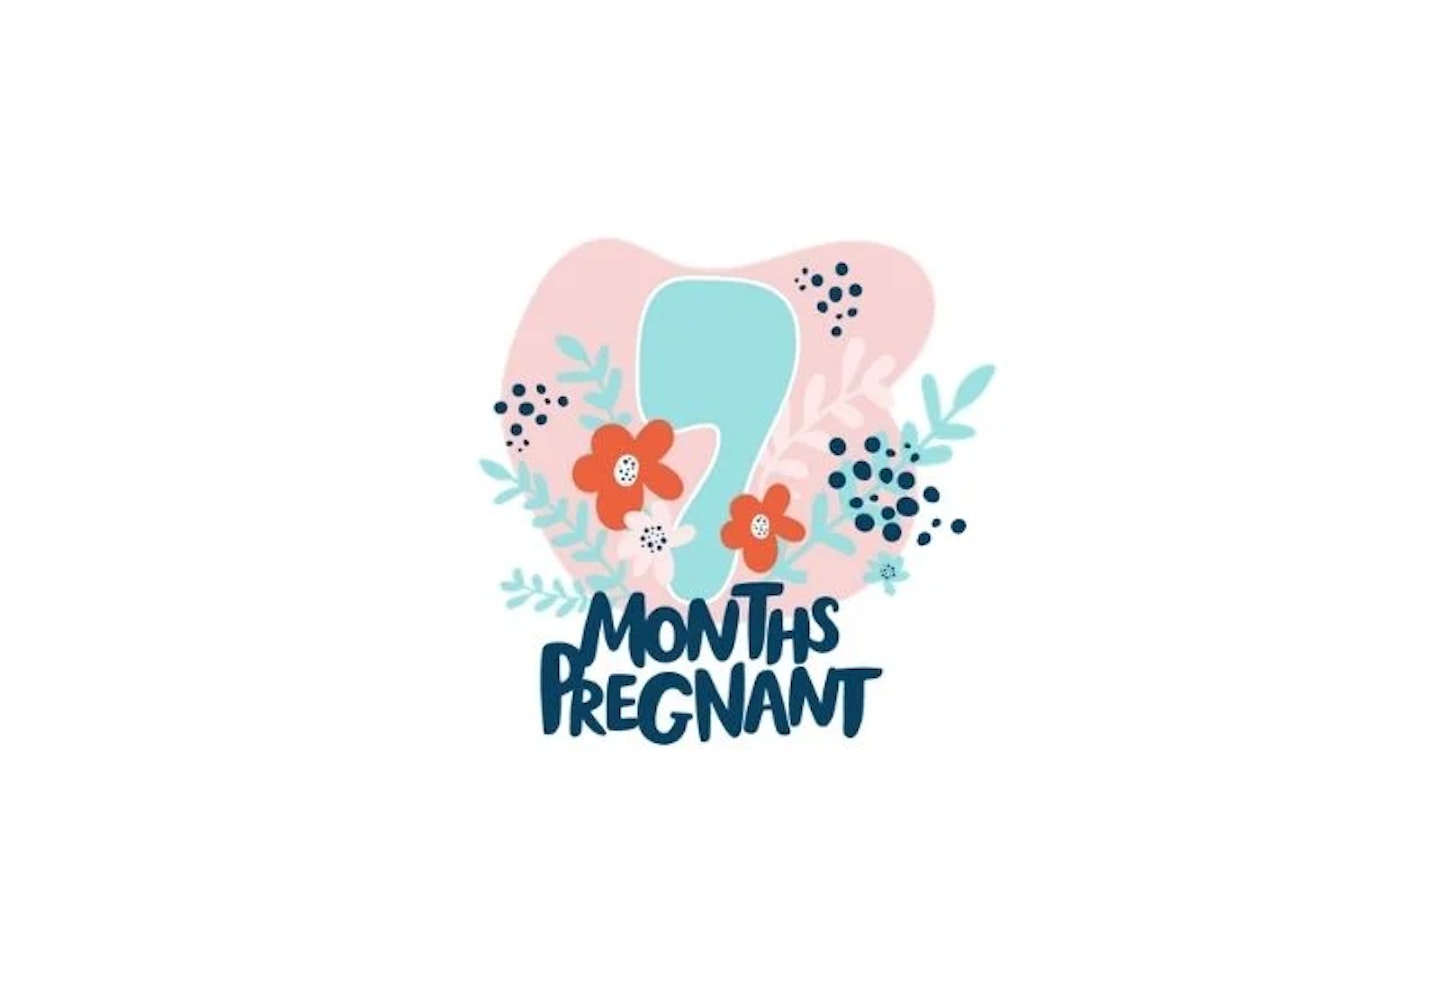 7 Months Pregnant